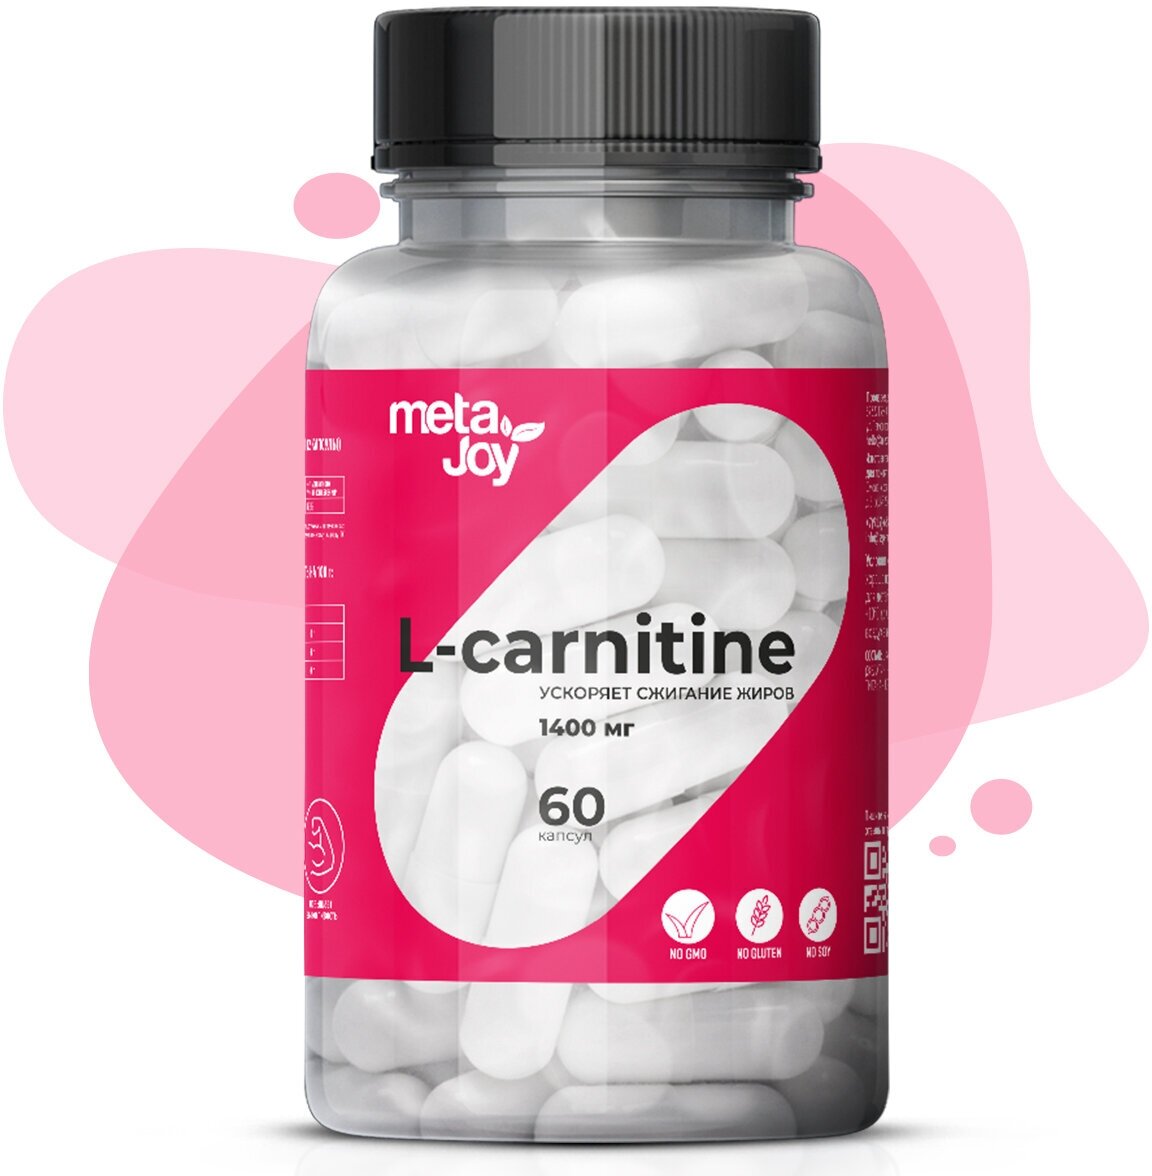 MetaJoy L-carnitine 60caps